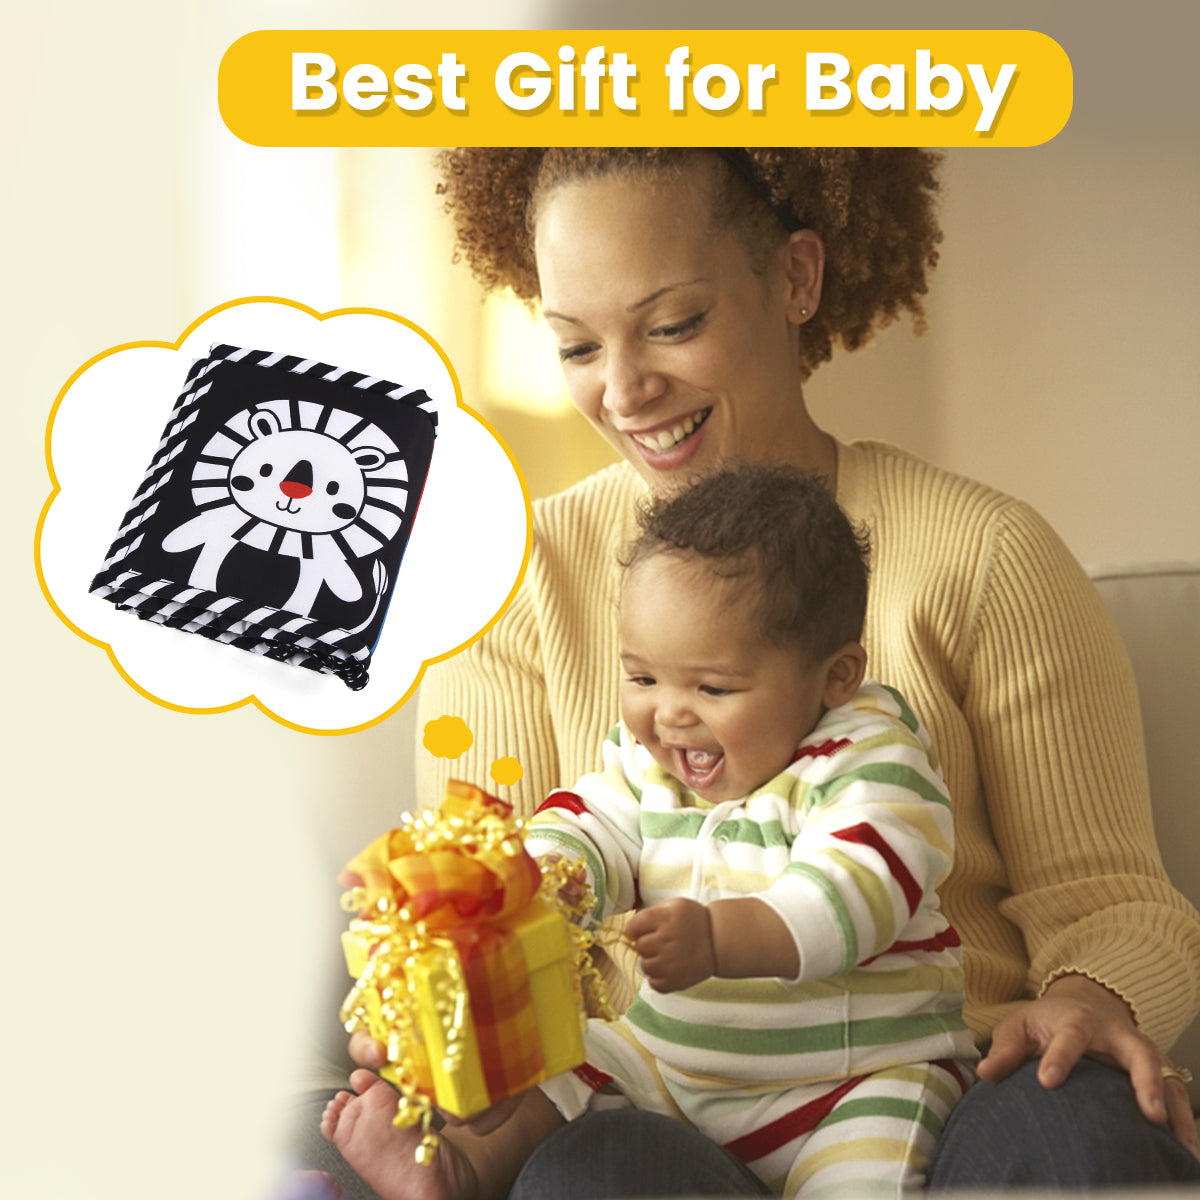 Joyfia Baby Toys 0-12 Months, High Contrast Baby Cloth Book for Newborns, Folding Infant Tummy Time Book with Mirror, Car Seat Stroller Crib Sensory Developmental Toys Boys Girls